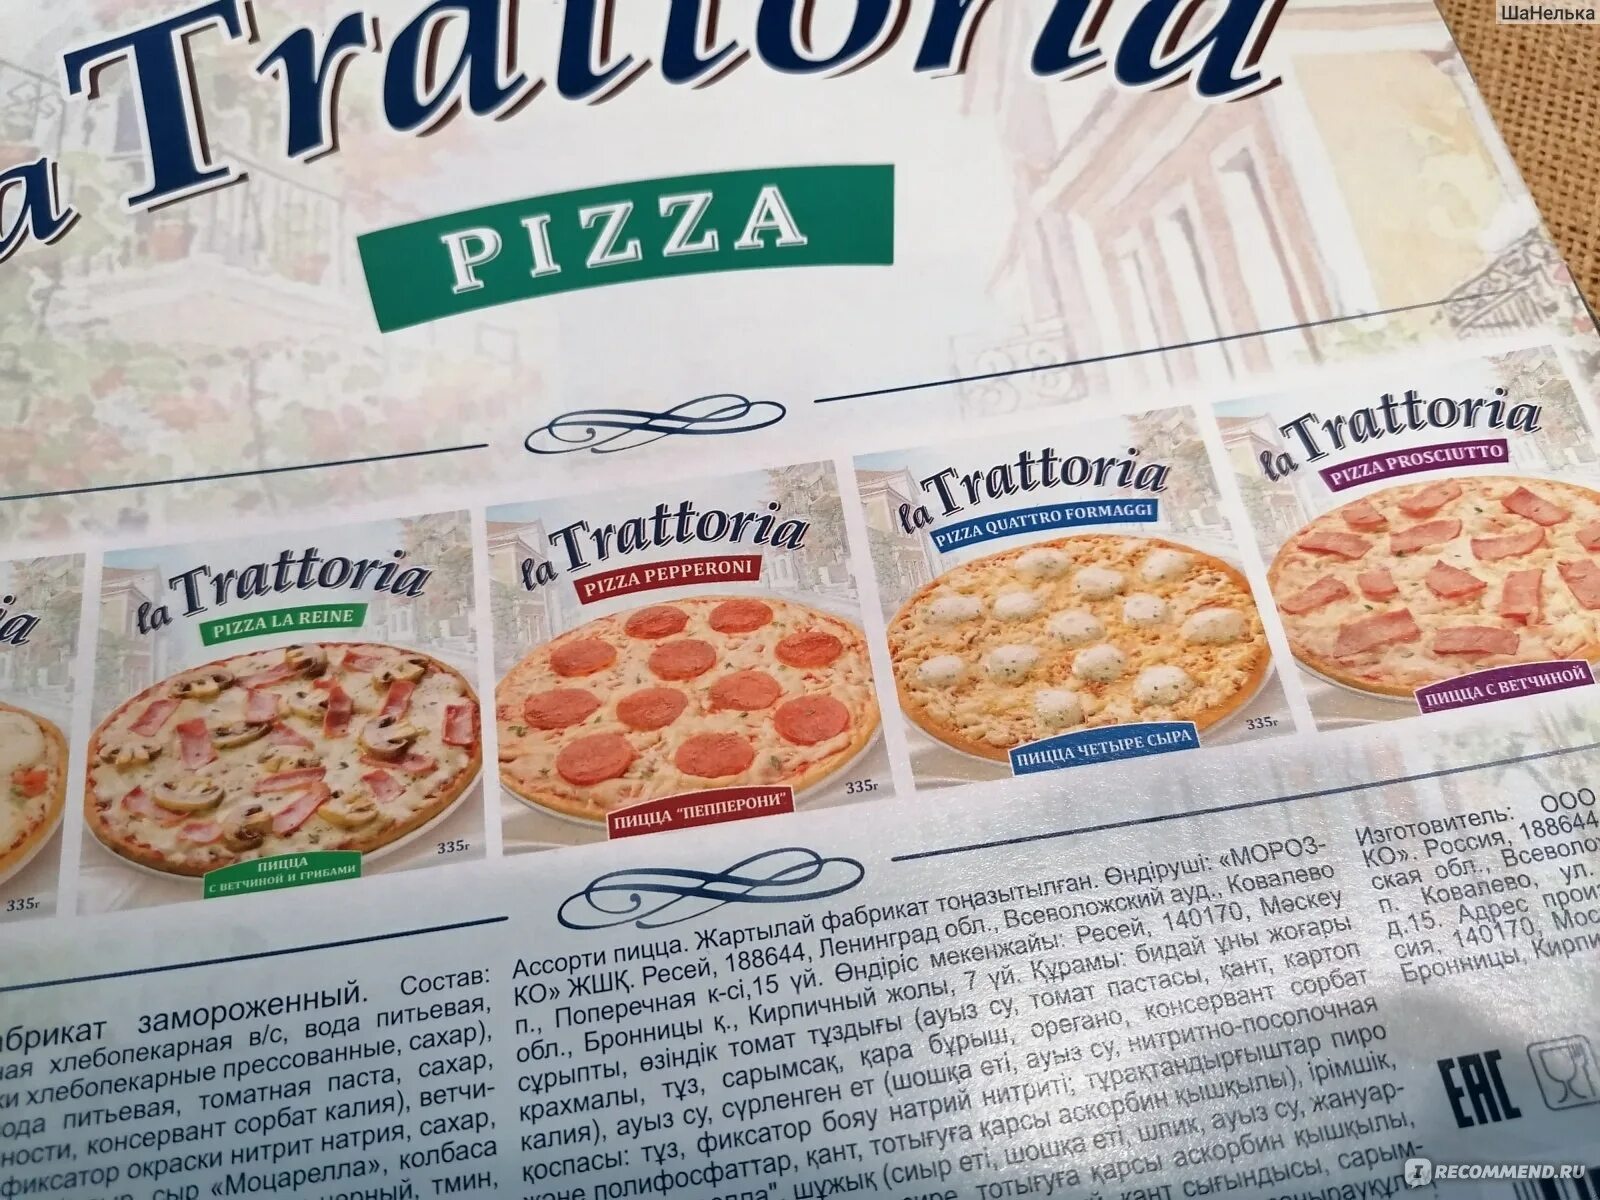 Пицца килокалории. Пицца la Trattoria. 100 Г пиццы. Моцарелла для пиццы Trattoria. Пицца Траттория ассорти.